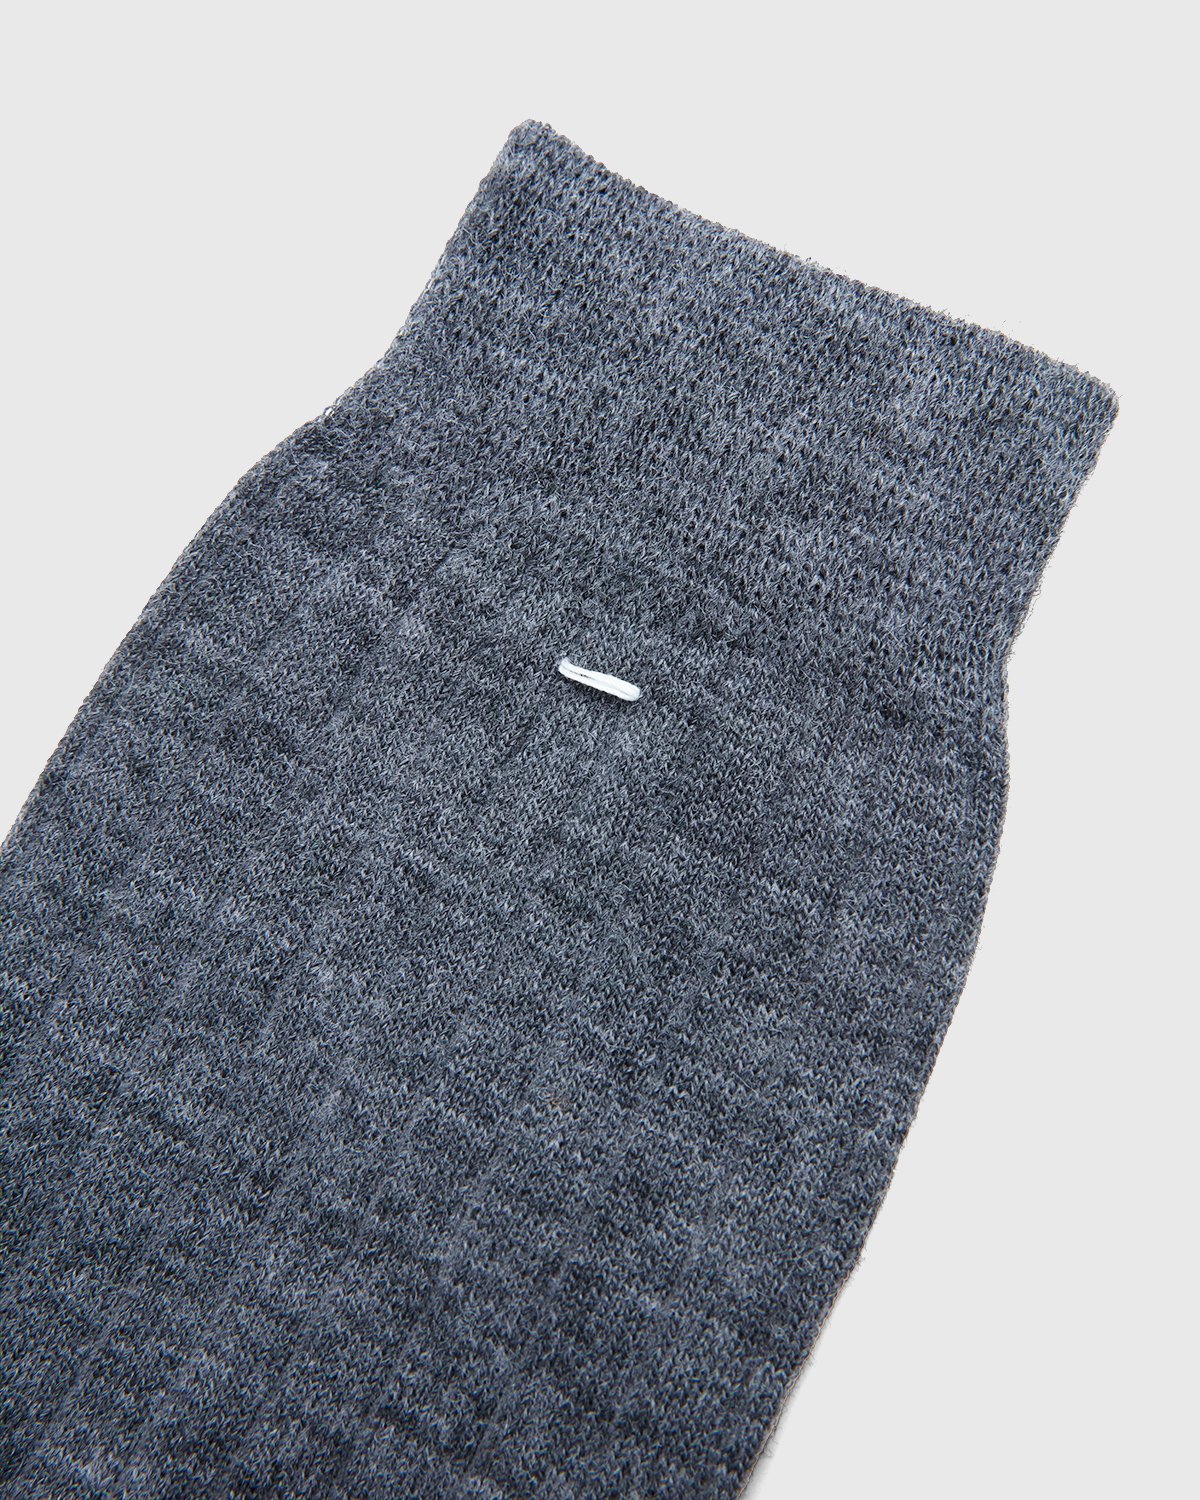 Maison Margiela - Tabi Socks Grey - Accessories - Grey - Image 4